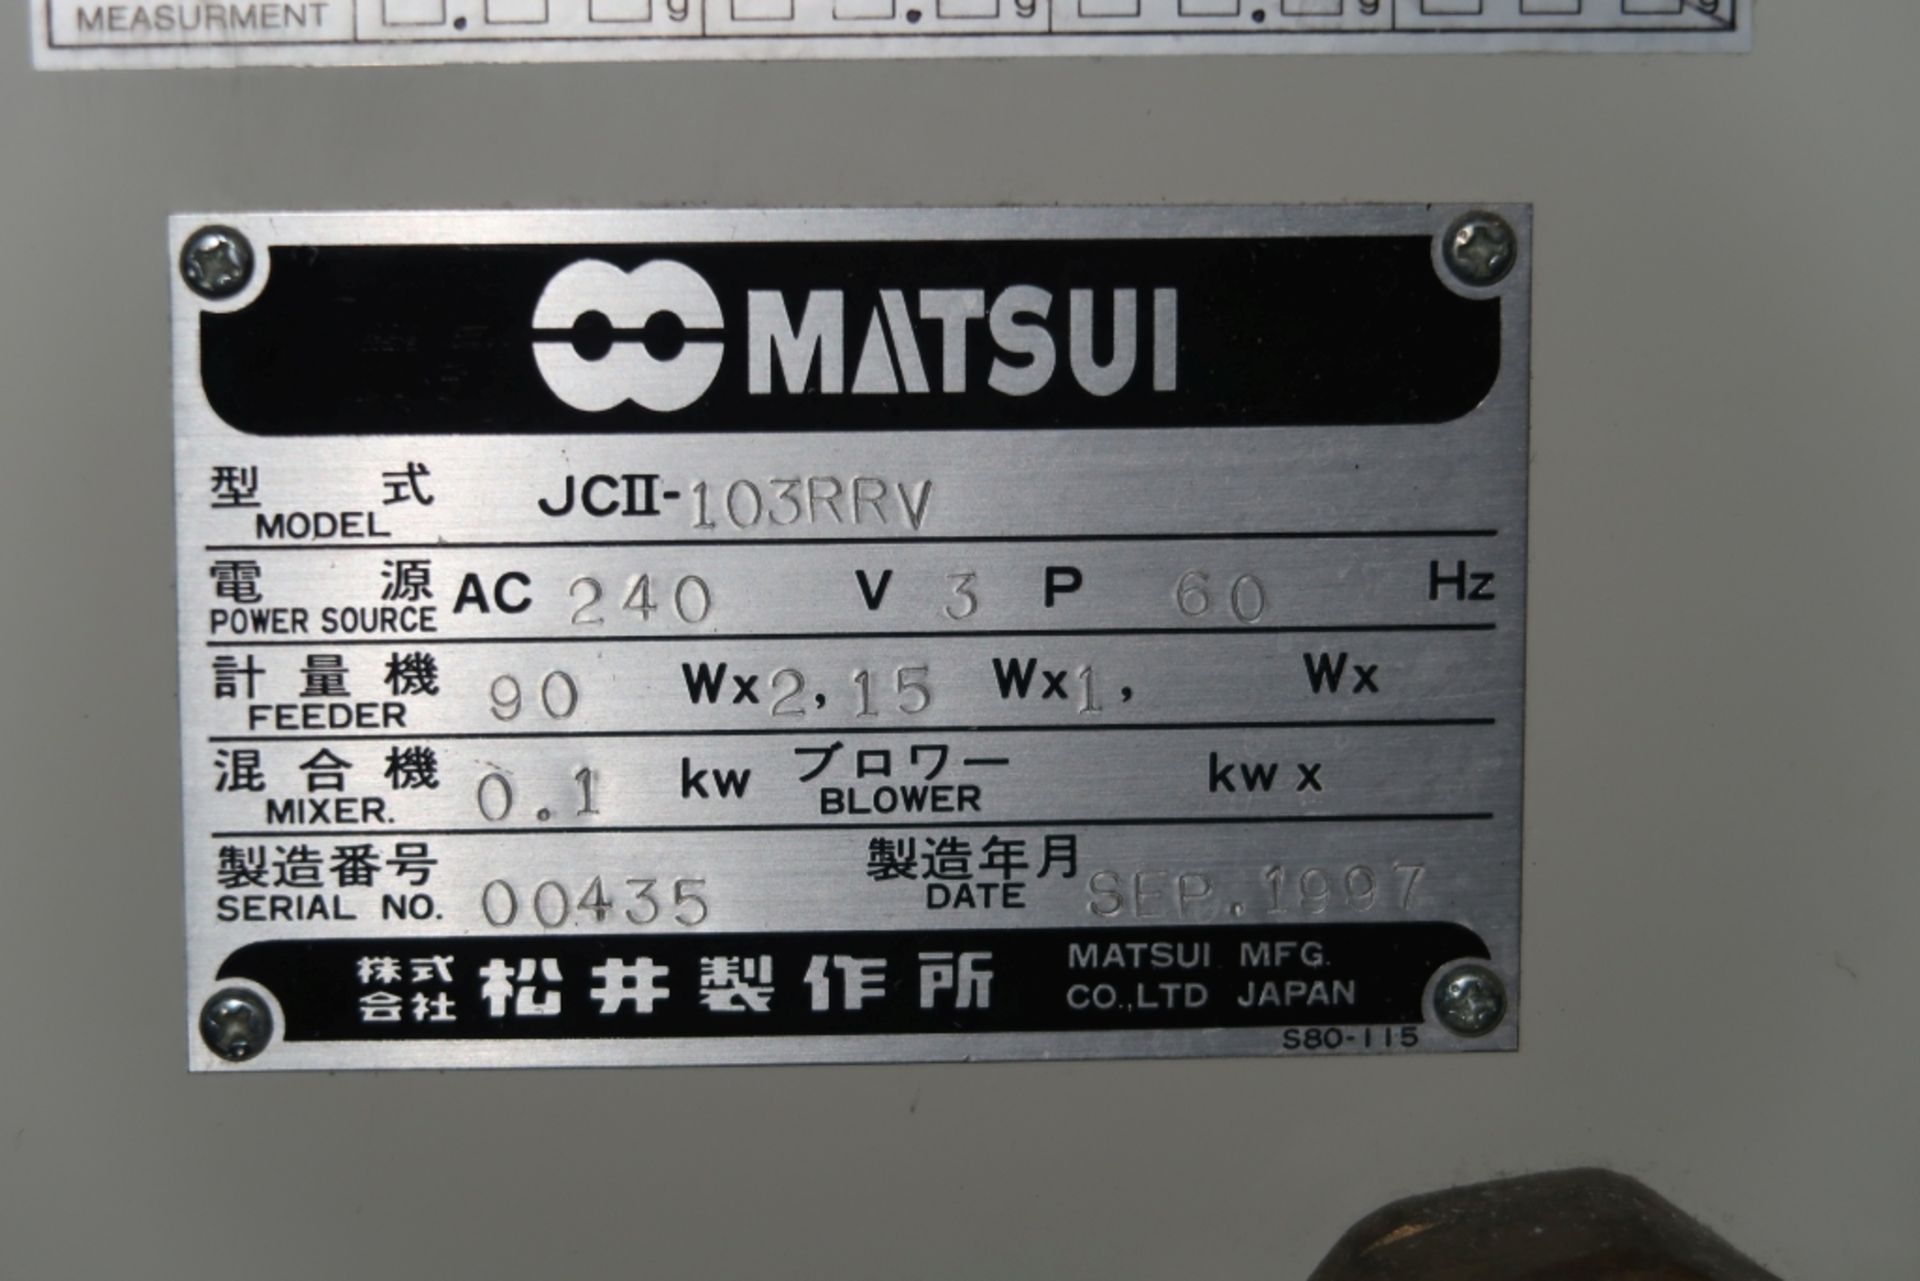 MATSUI COLOUR BLENDER MOD: JCII-103RRV, WITH CONTROL AND JET SELECTOR, 240V 3PH - Image 5 of 5